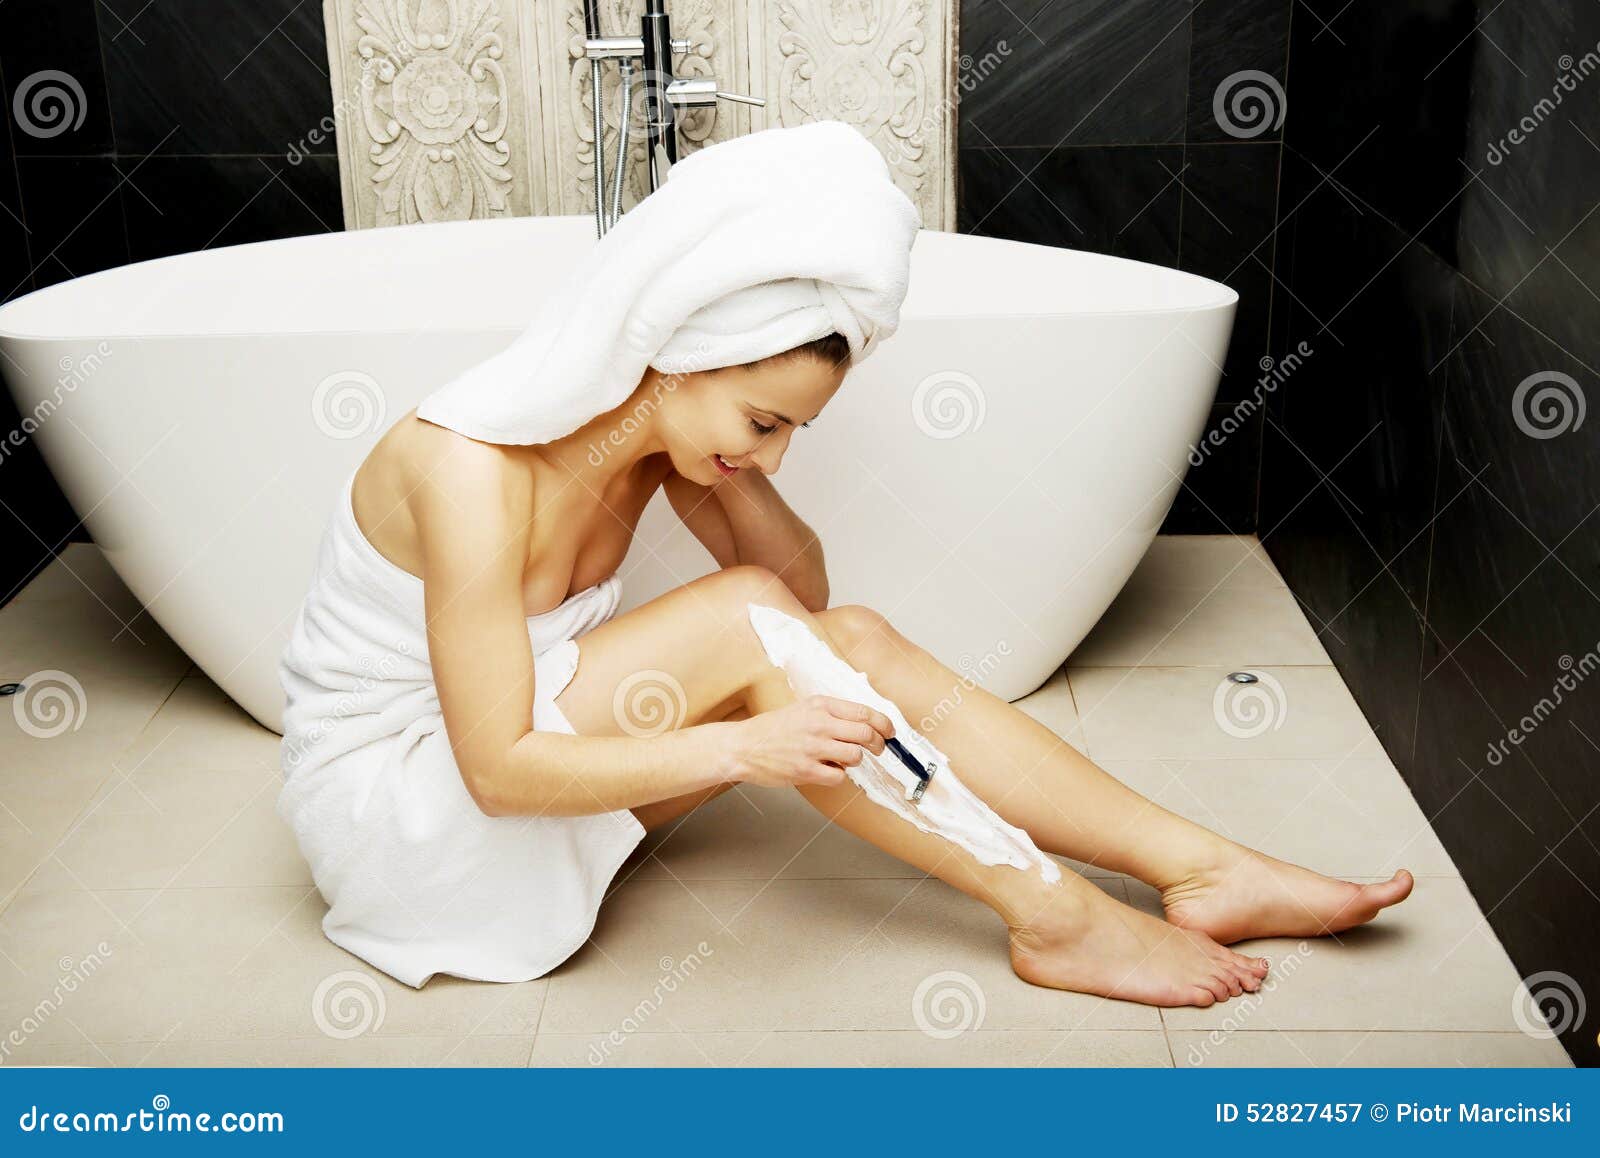 Woman Shaving Her Leg Stock Image Image Of Hygienic